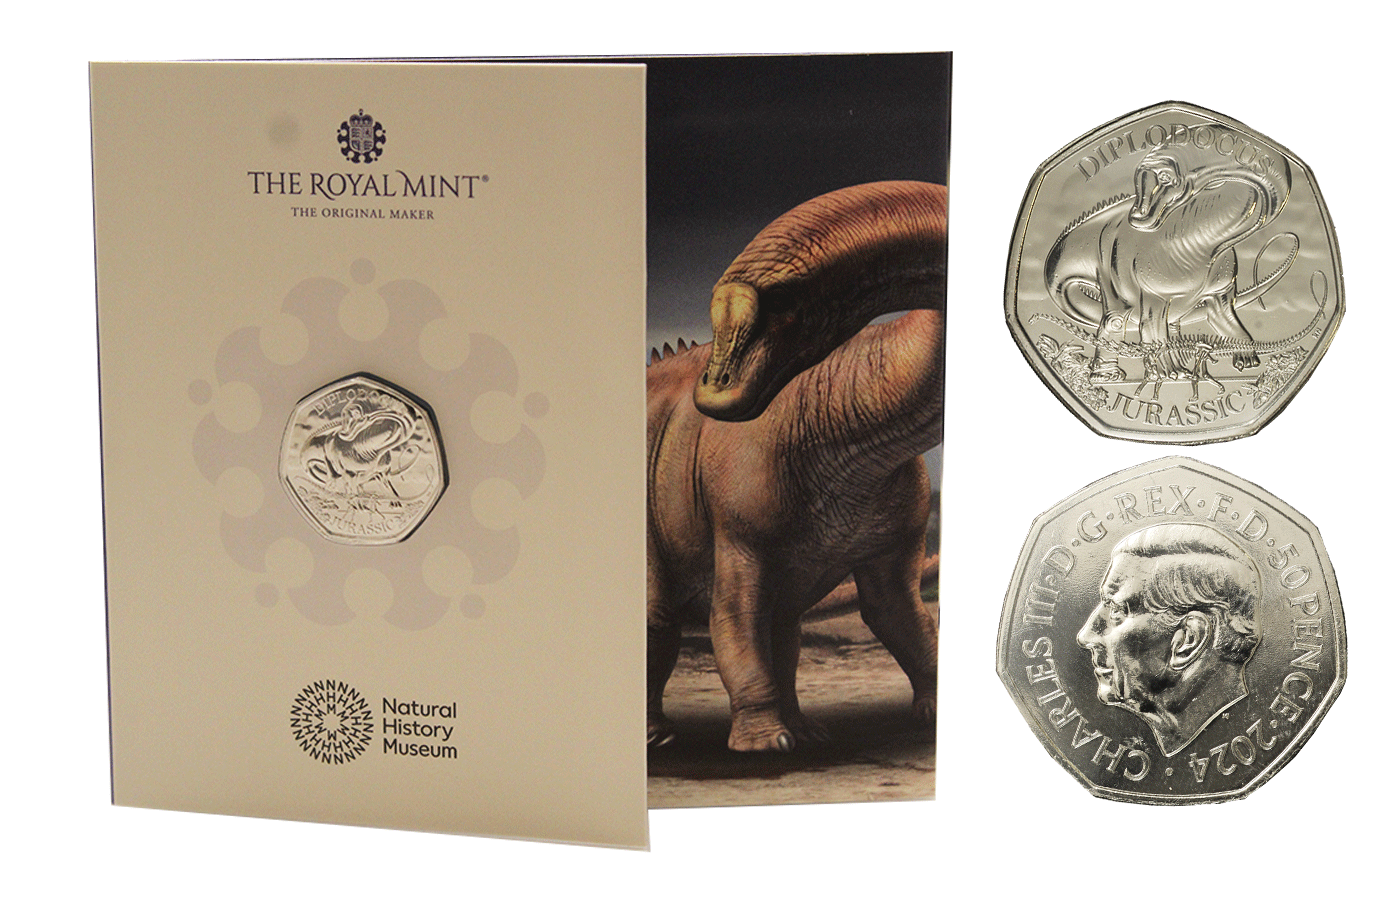 "Natural History Museum: Diplodocus" - Re Carlo III - 50 Pence - In folder